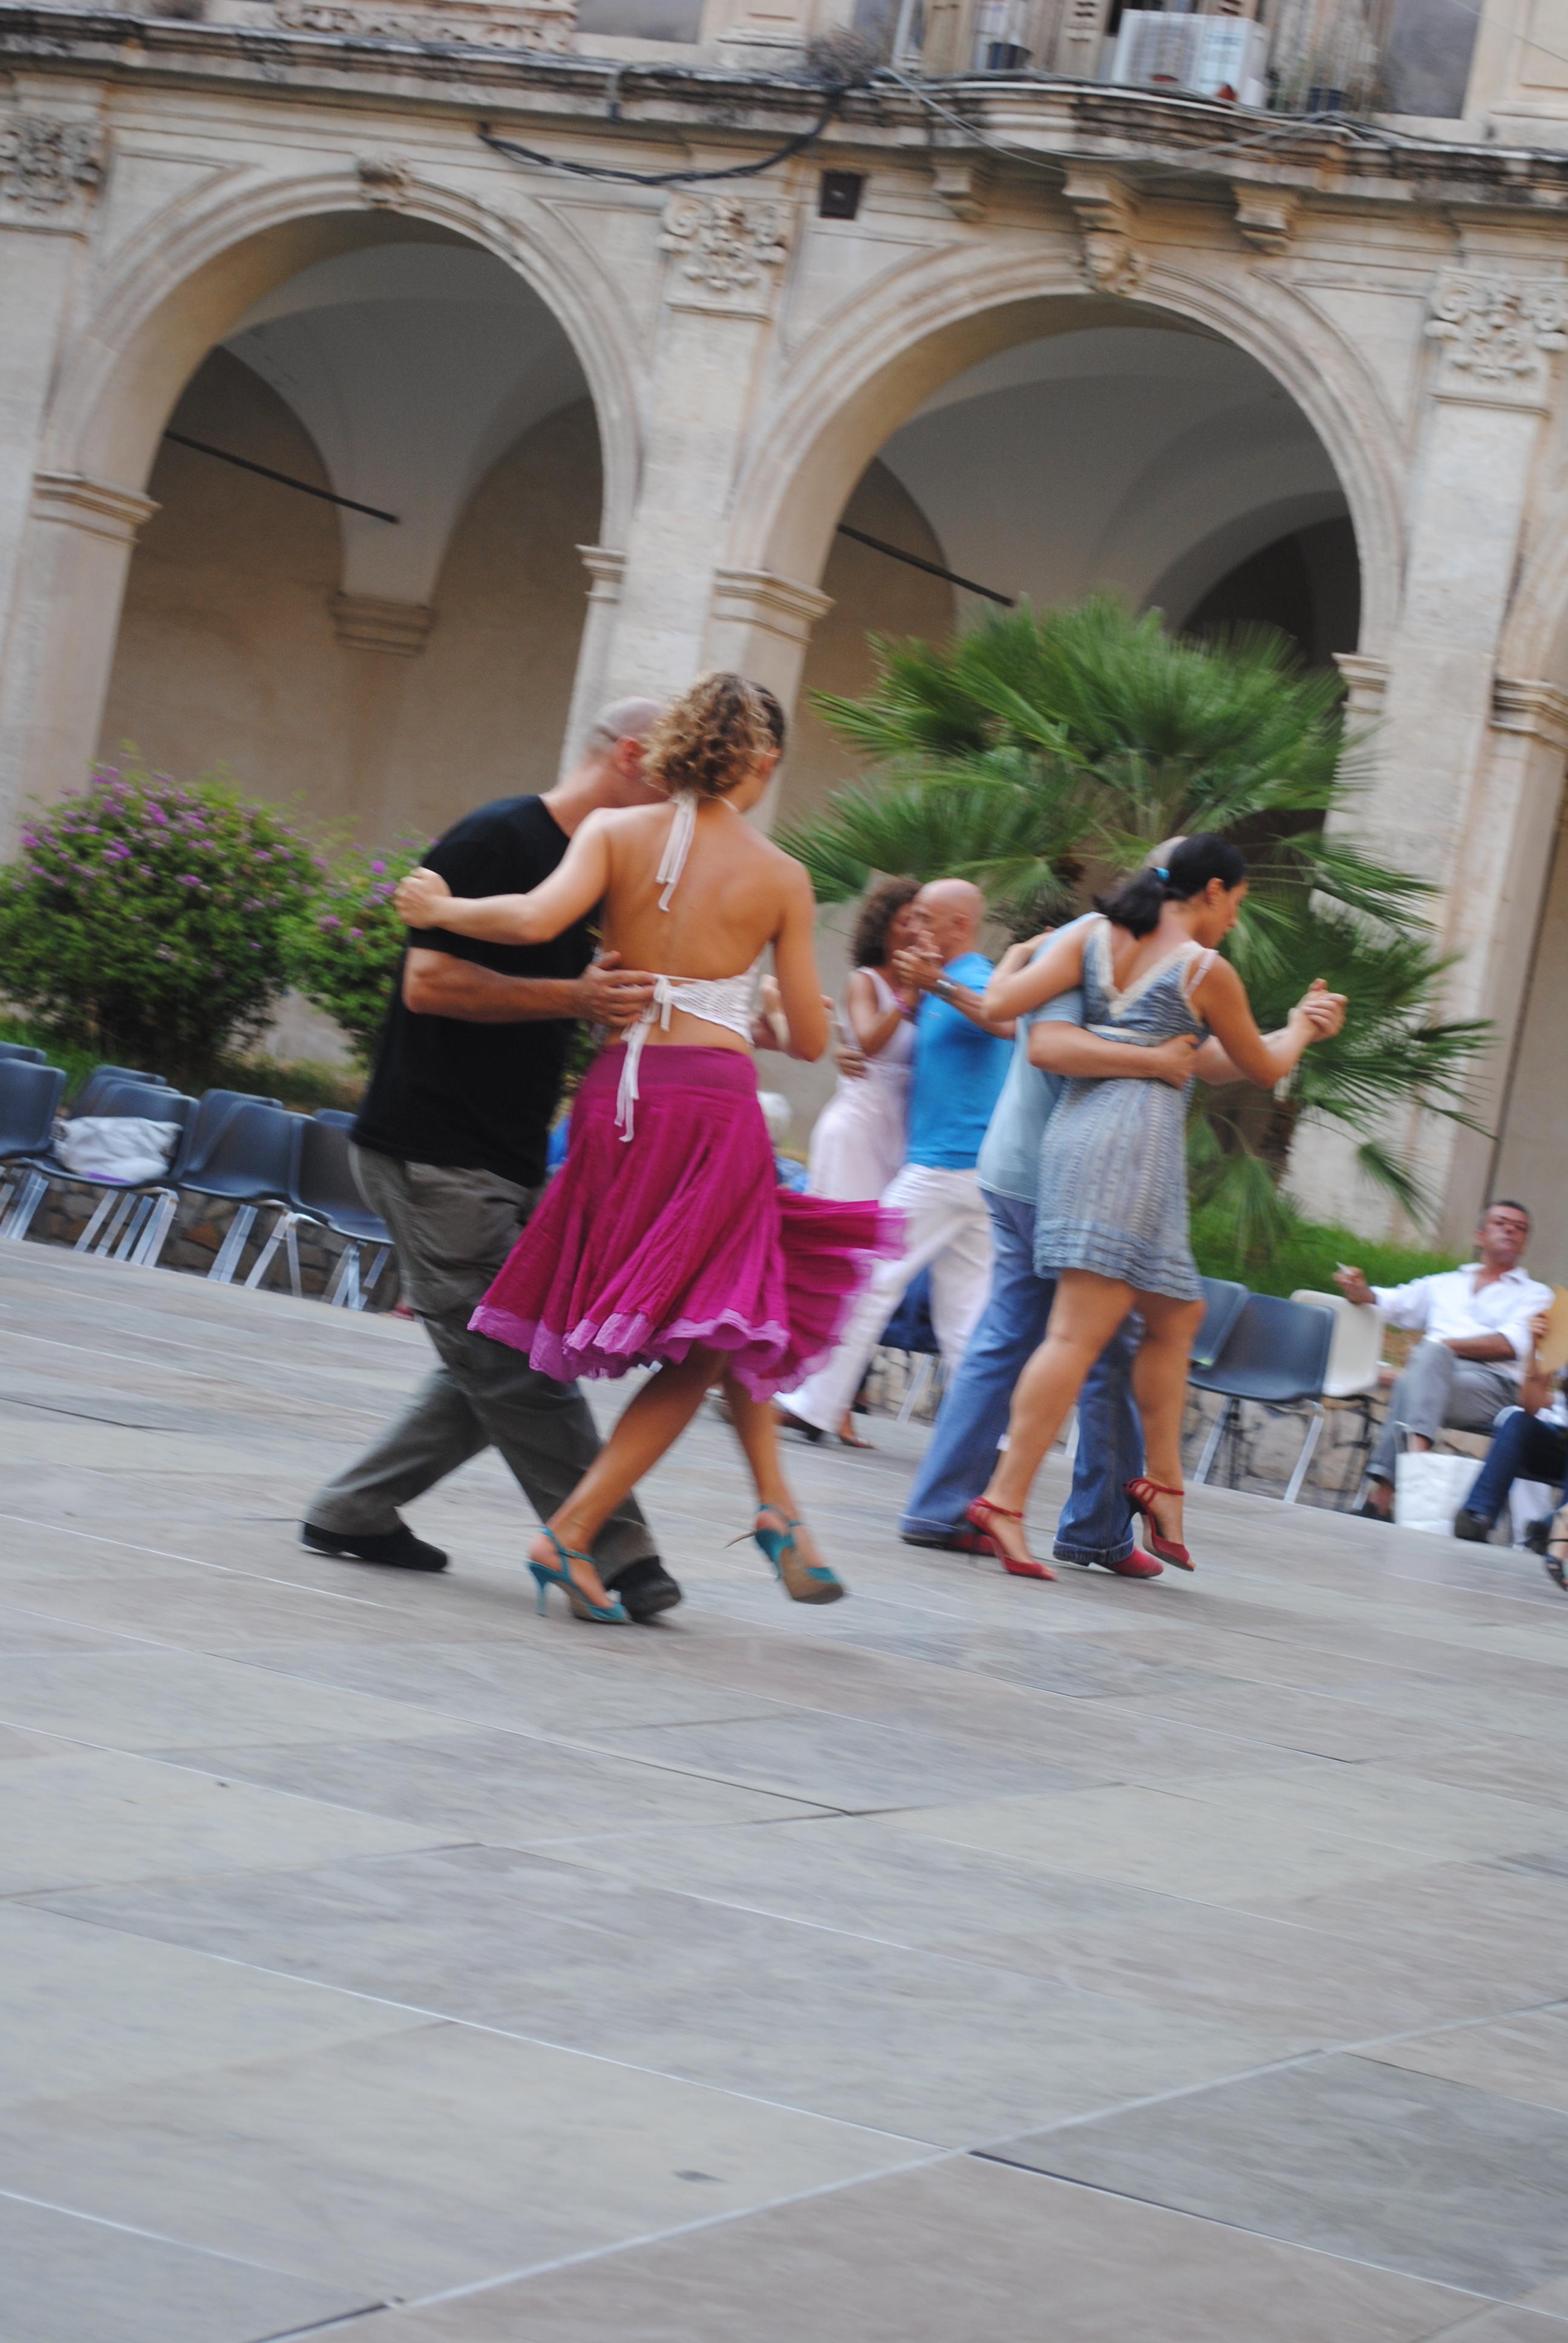 Catania Tango Festival